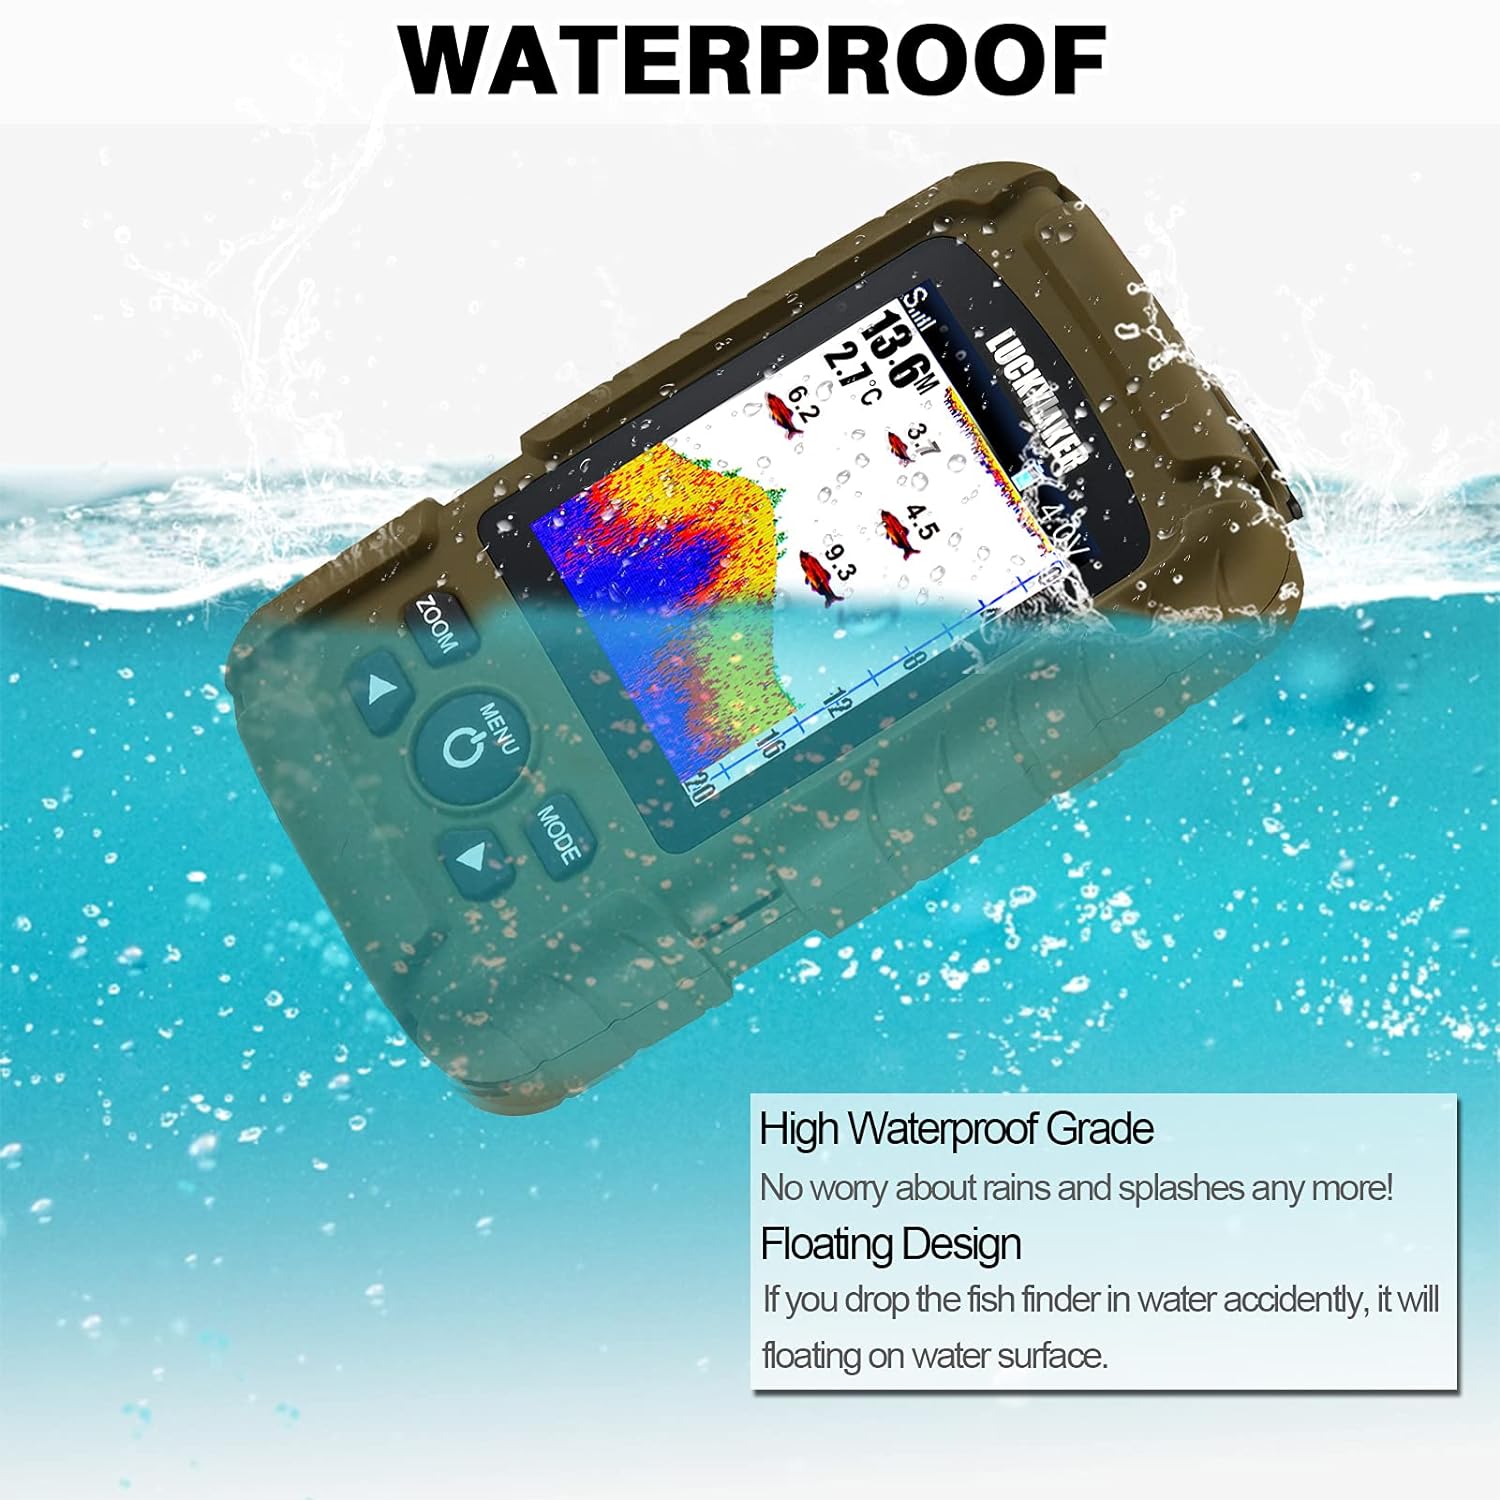 LUCKYLAKER Sensor Handheld Fish Finder Water LCD Boat Depth Finder Display Transducer Wireless Waterproof Fish Finders Transducer Fishing Gift